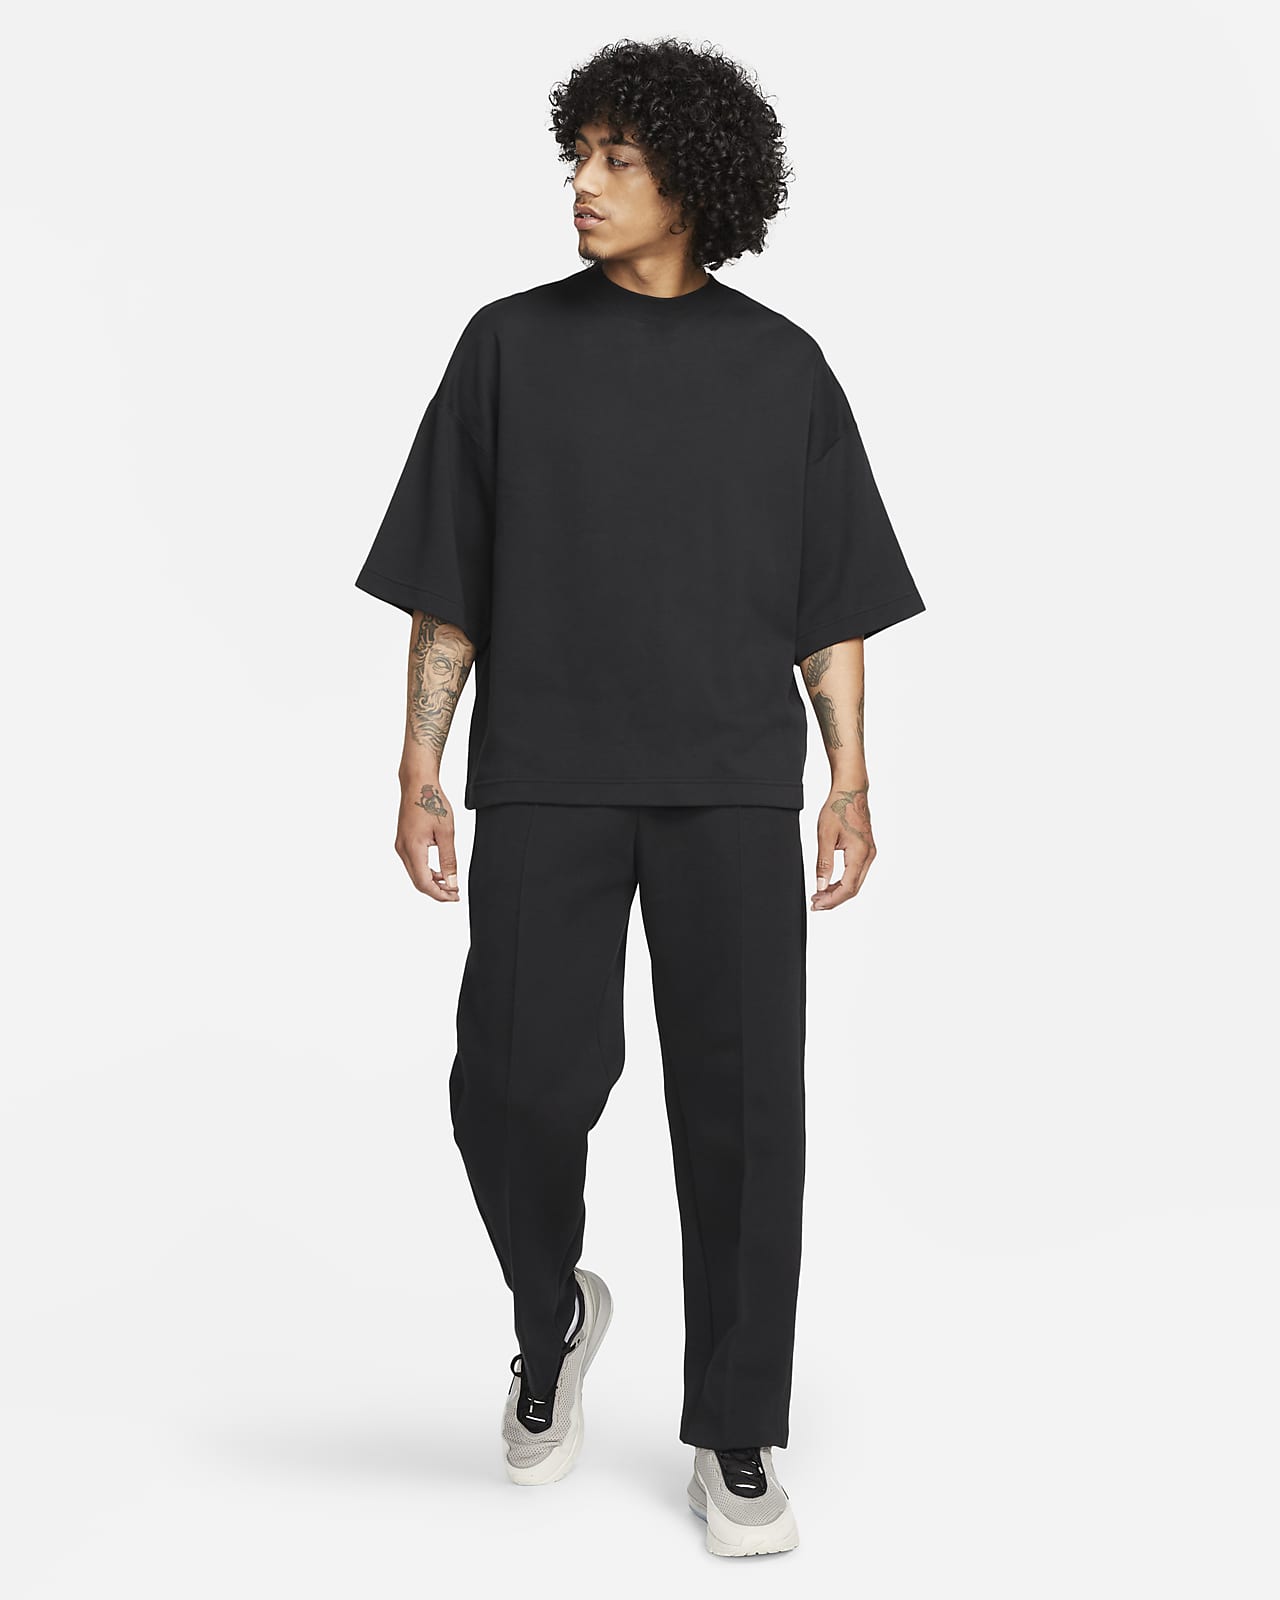 Nike Tech Fleece Men Black Activewear Pants for Men for sale